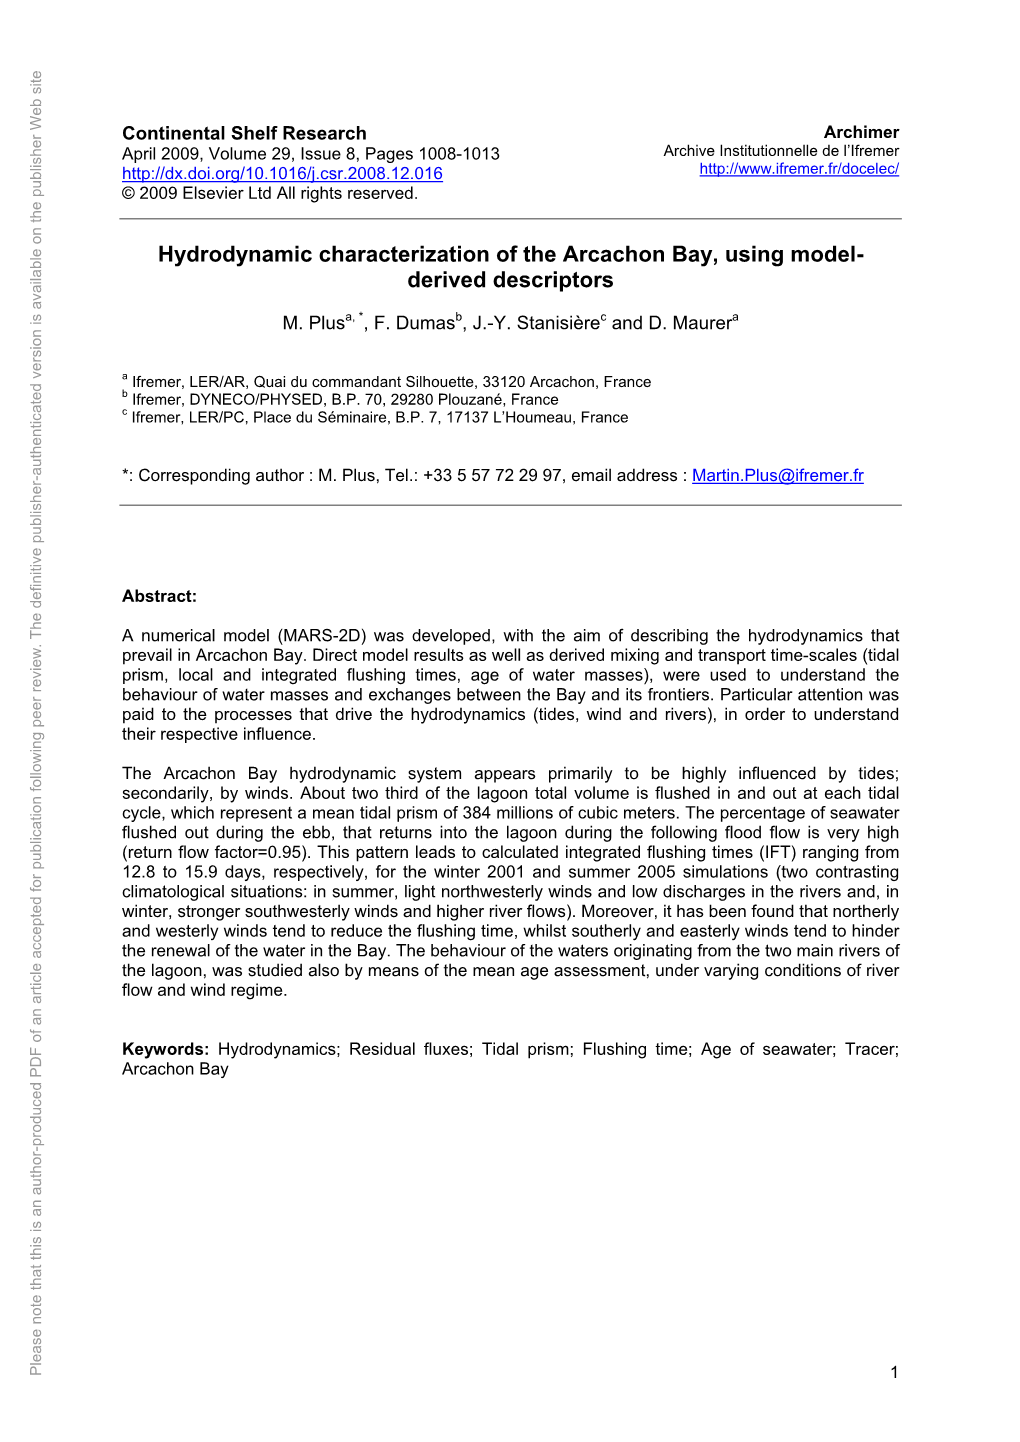 Hydrodynamic Characterization of the Arcachon Bay, Using Model-Derived Descriptors